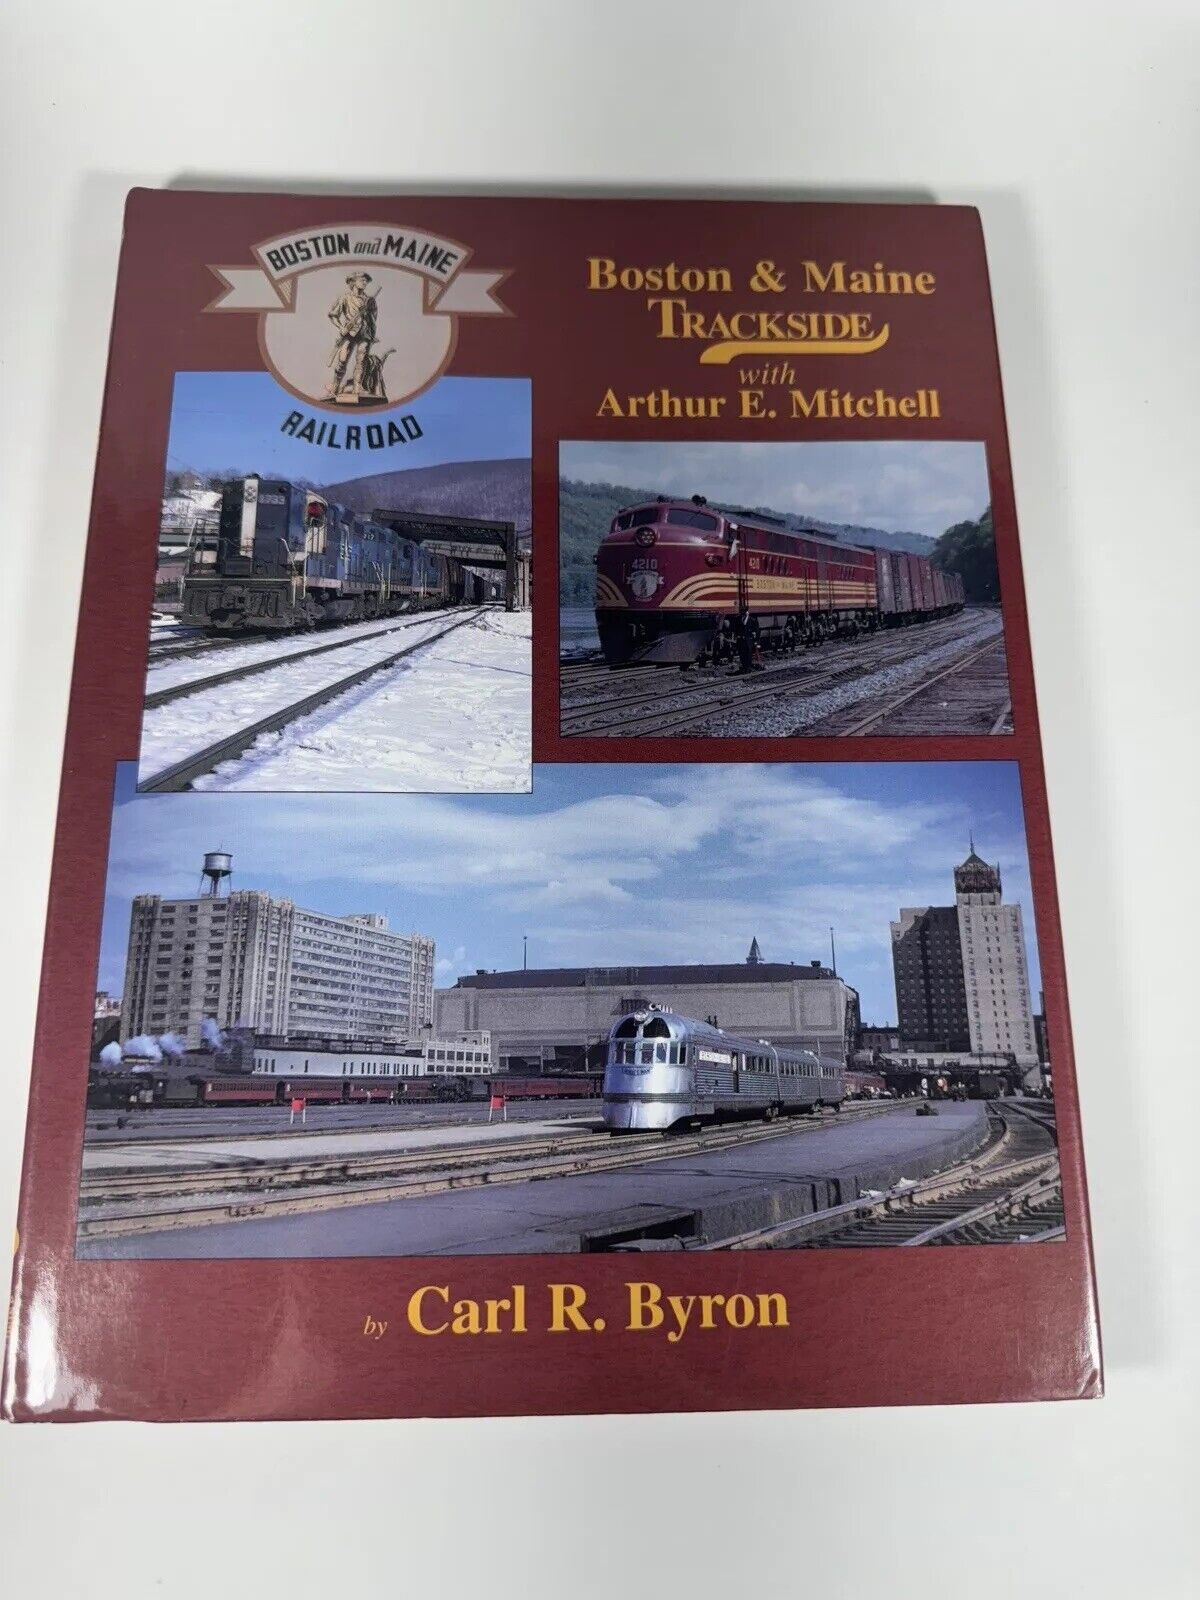 Morning Sun: Boston & Maine Trackside by Carl R. Byron ©1999 HC Book